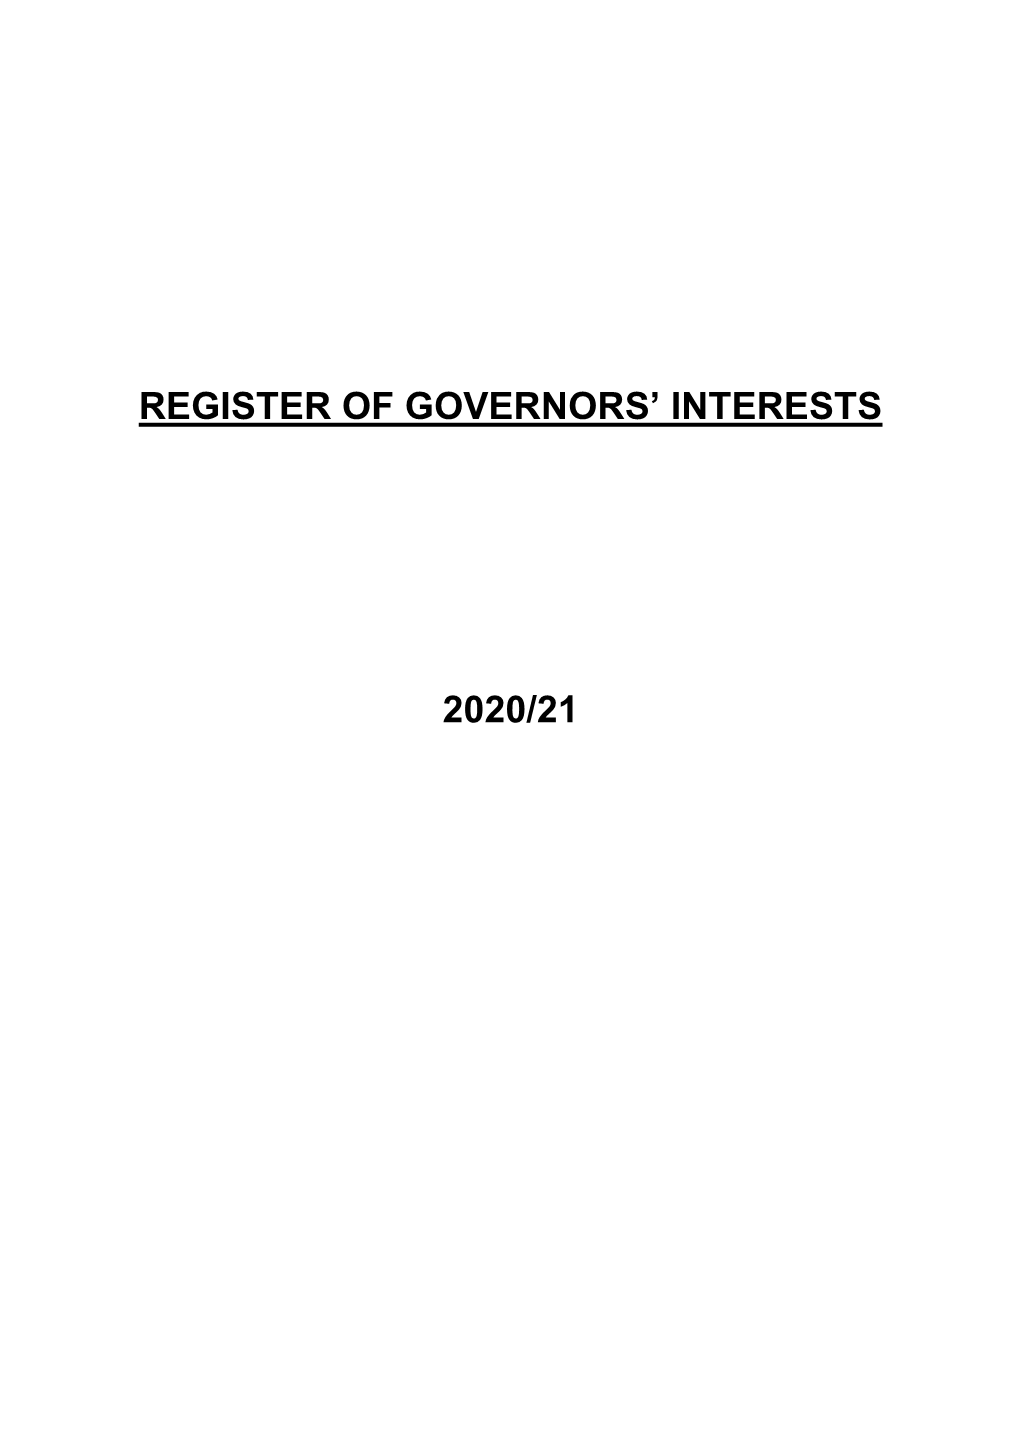 Register of Governors' Interests 2020/21